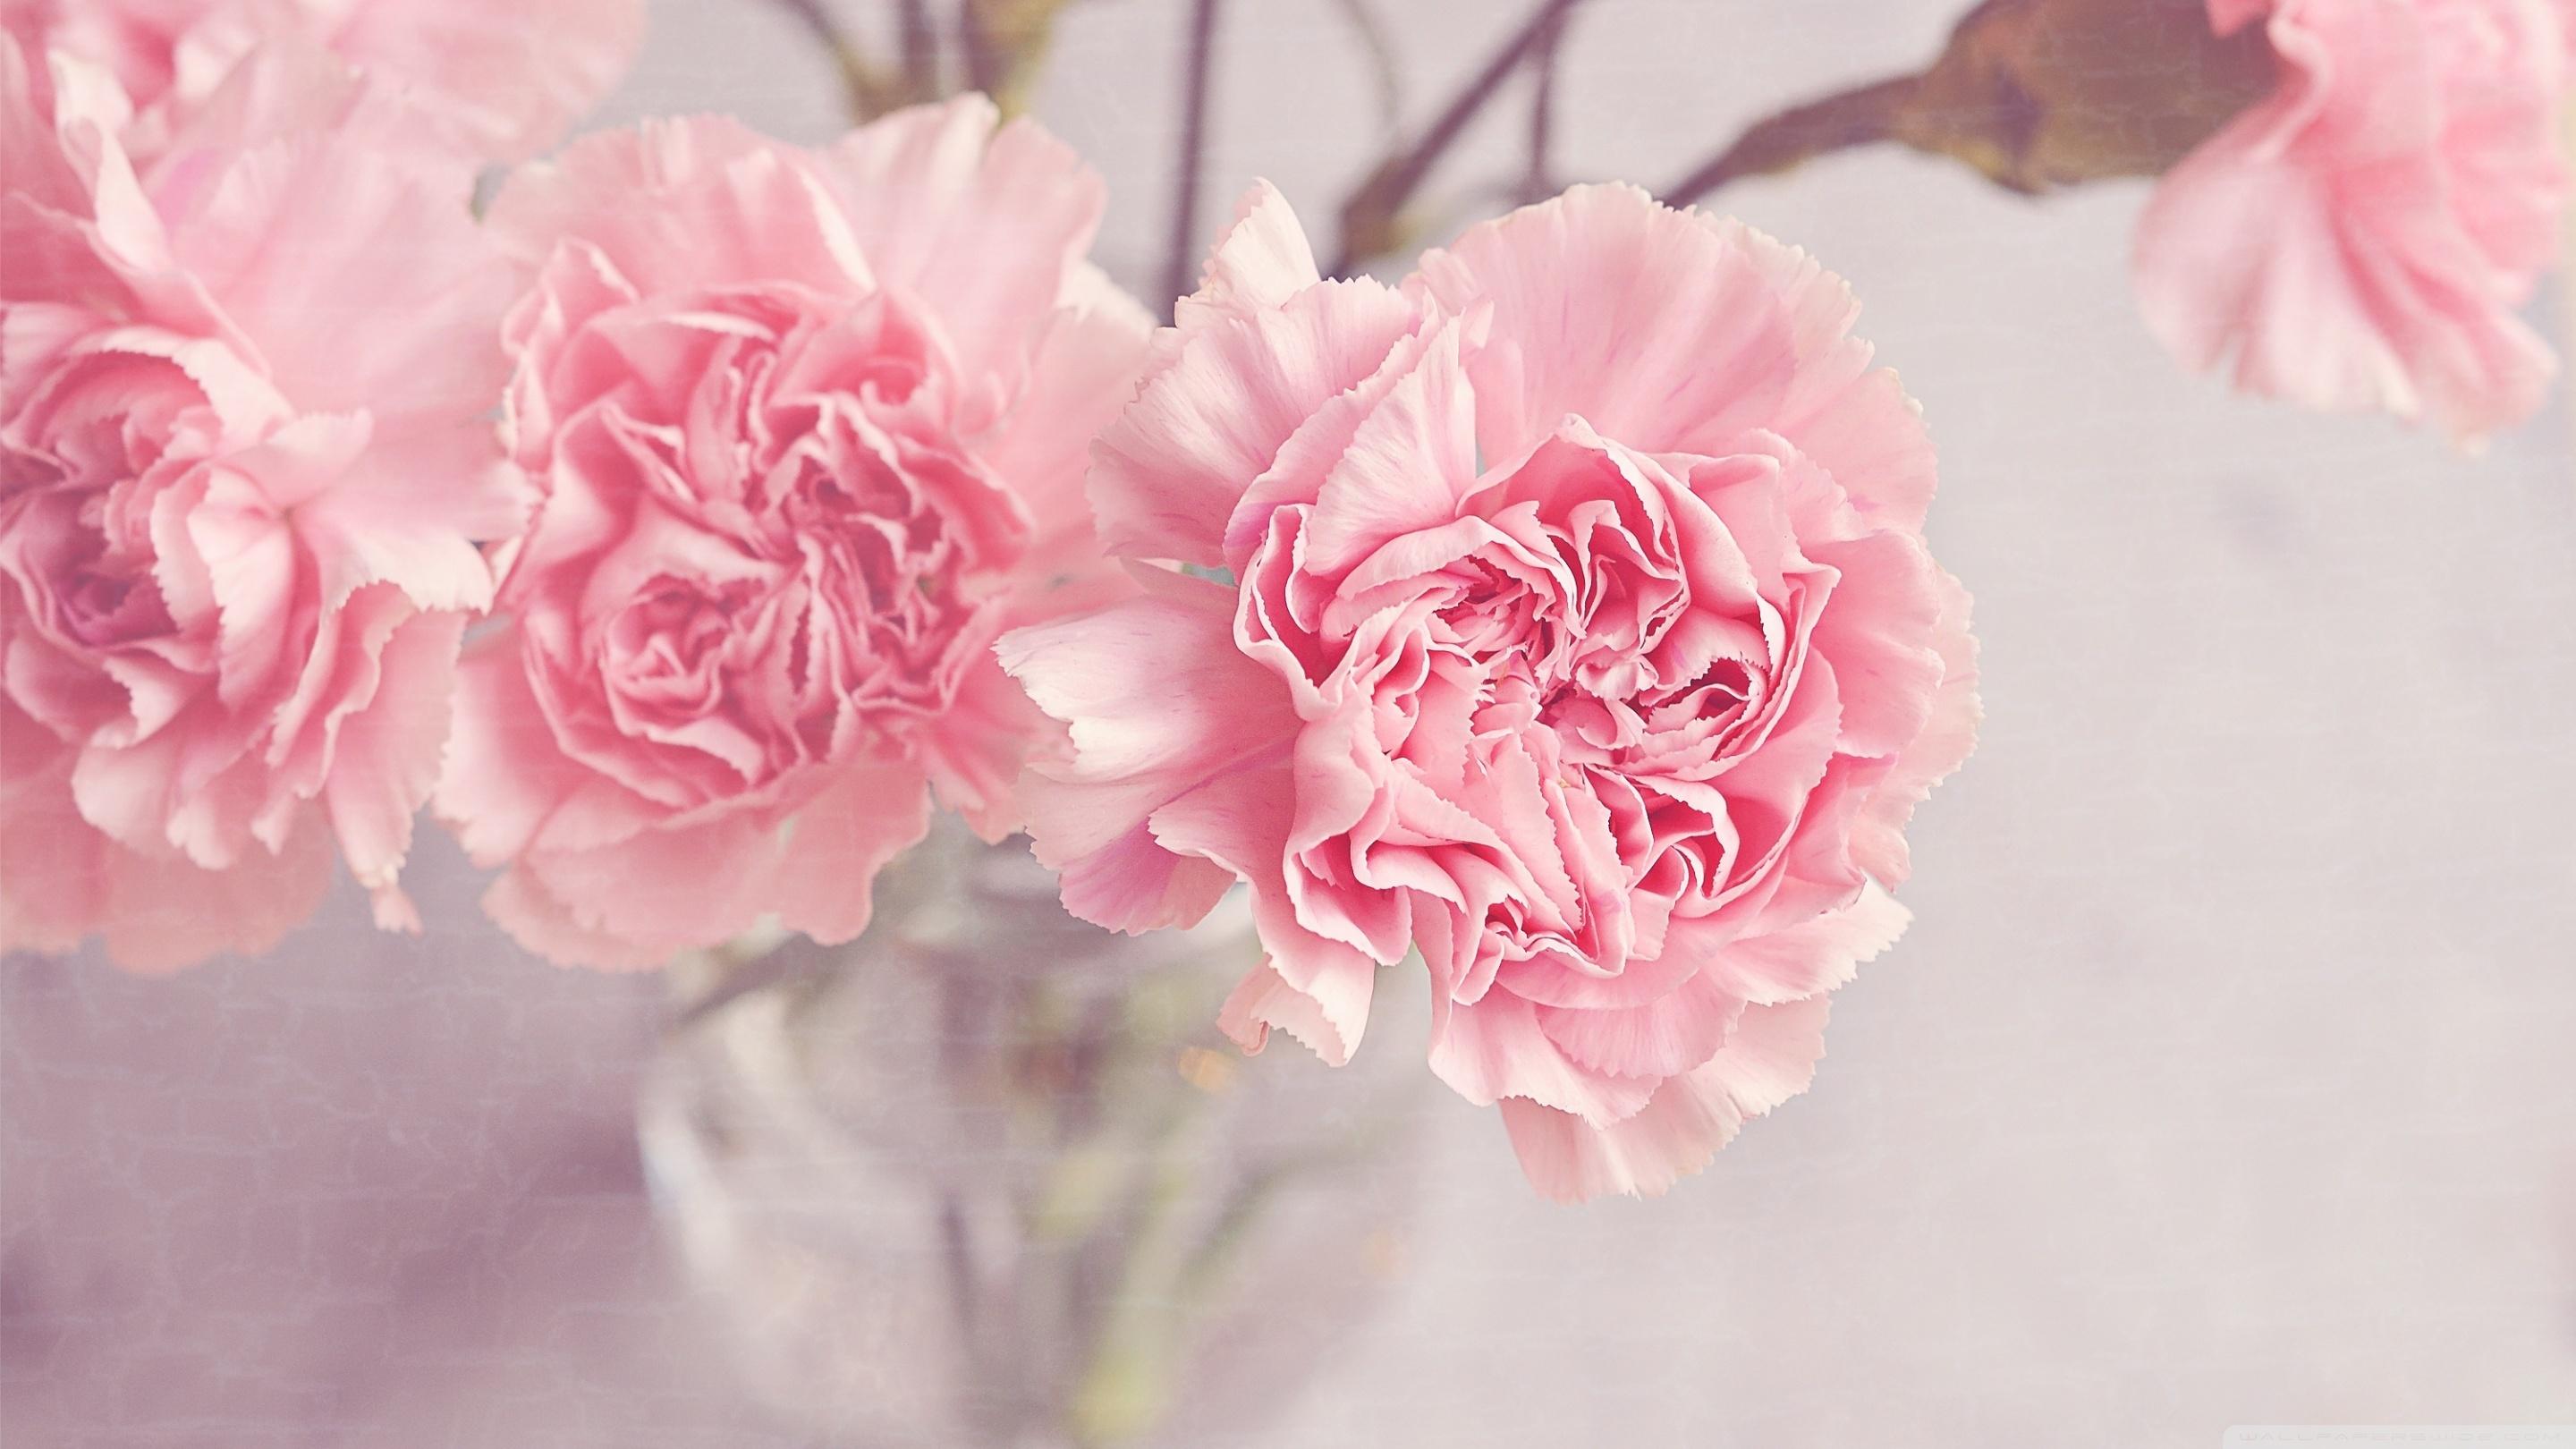 Light Pink Carnations Flowers in a Vase Ultra HD Desktop